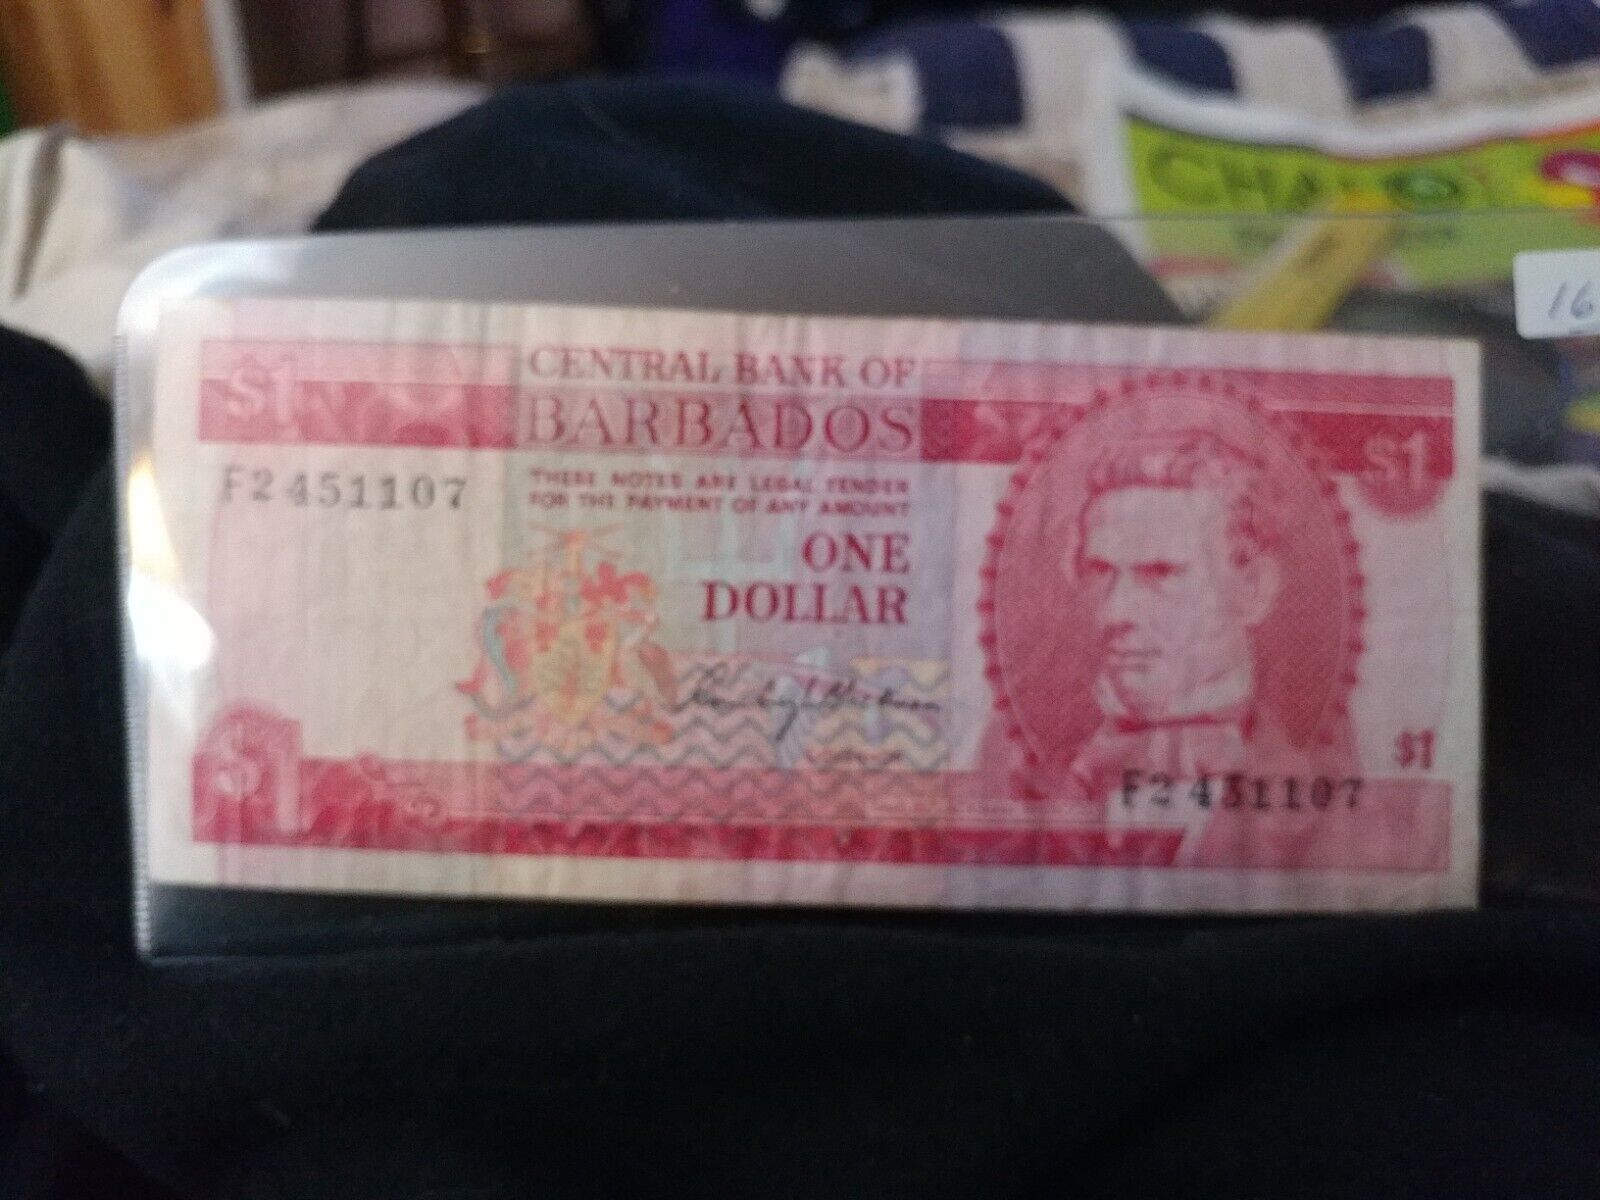 Barbados One Dollar 1973 Banknote.  Free Shipping.